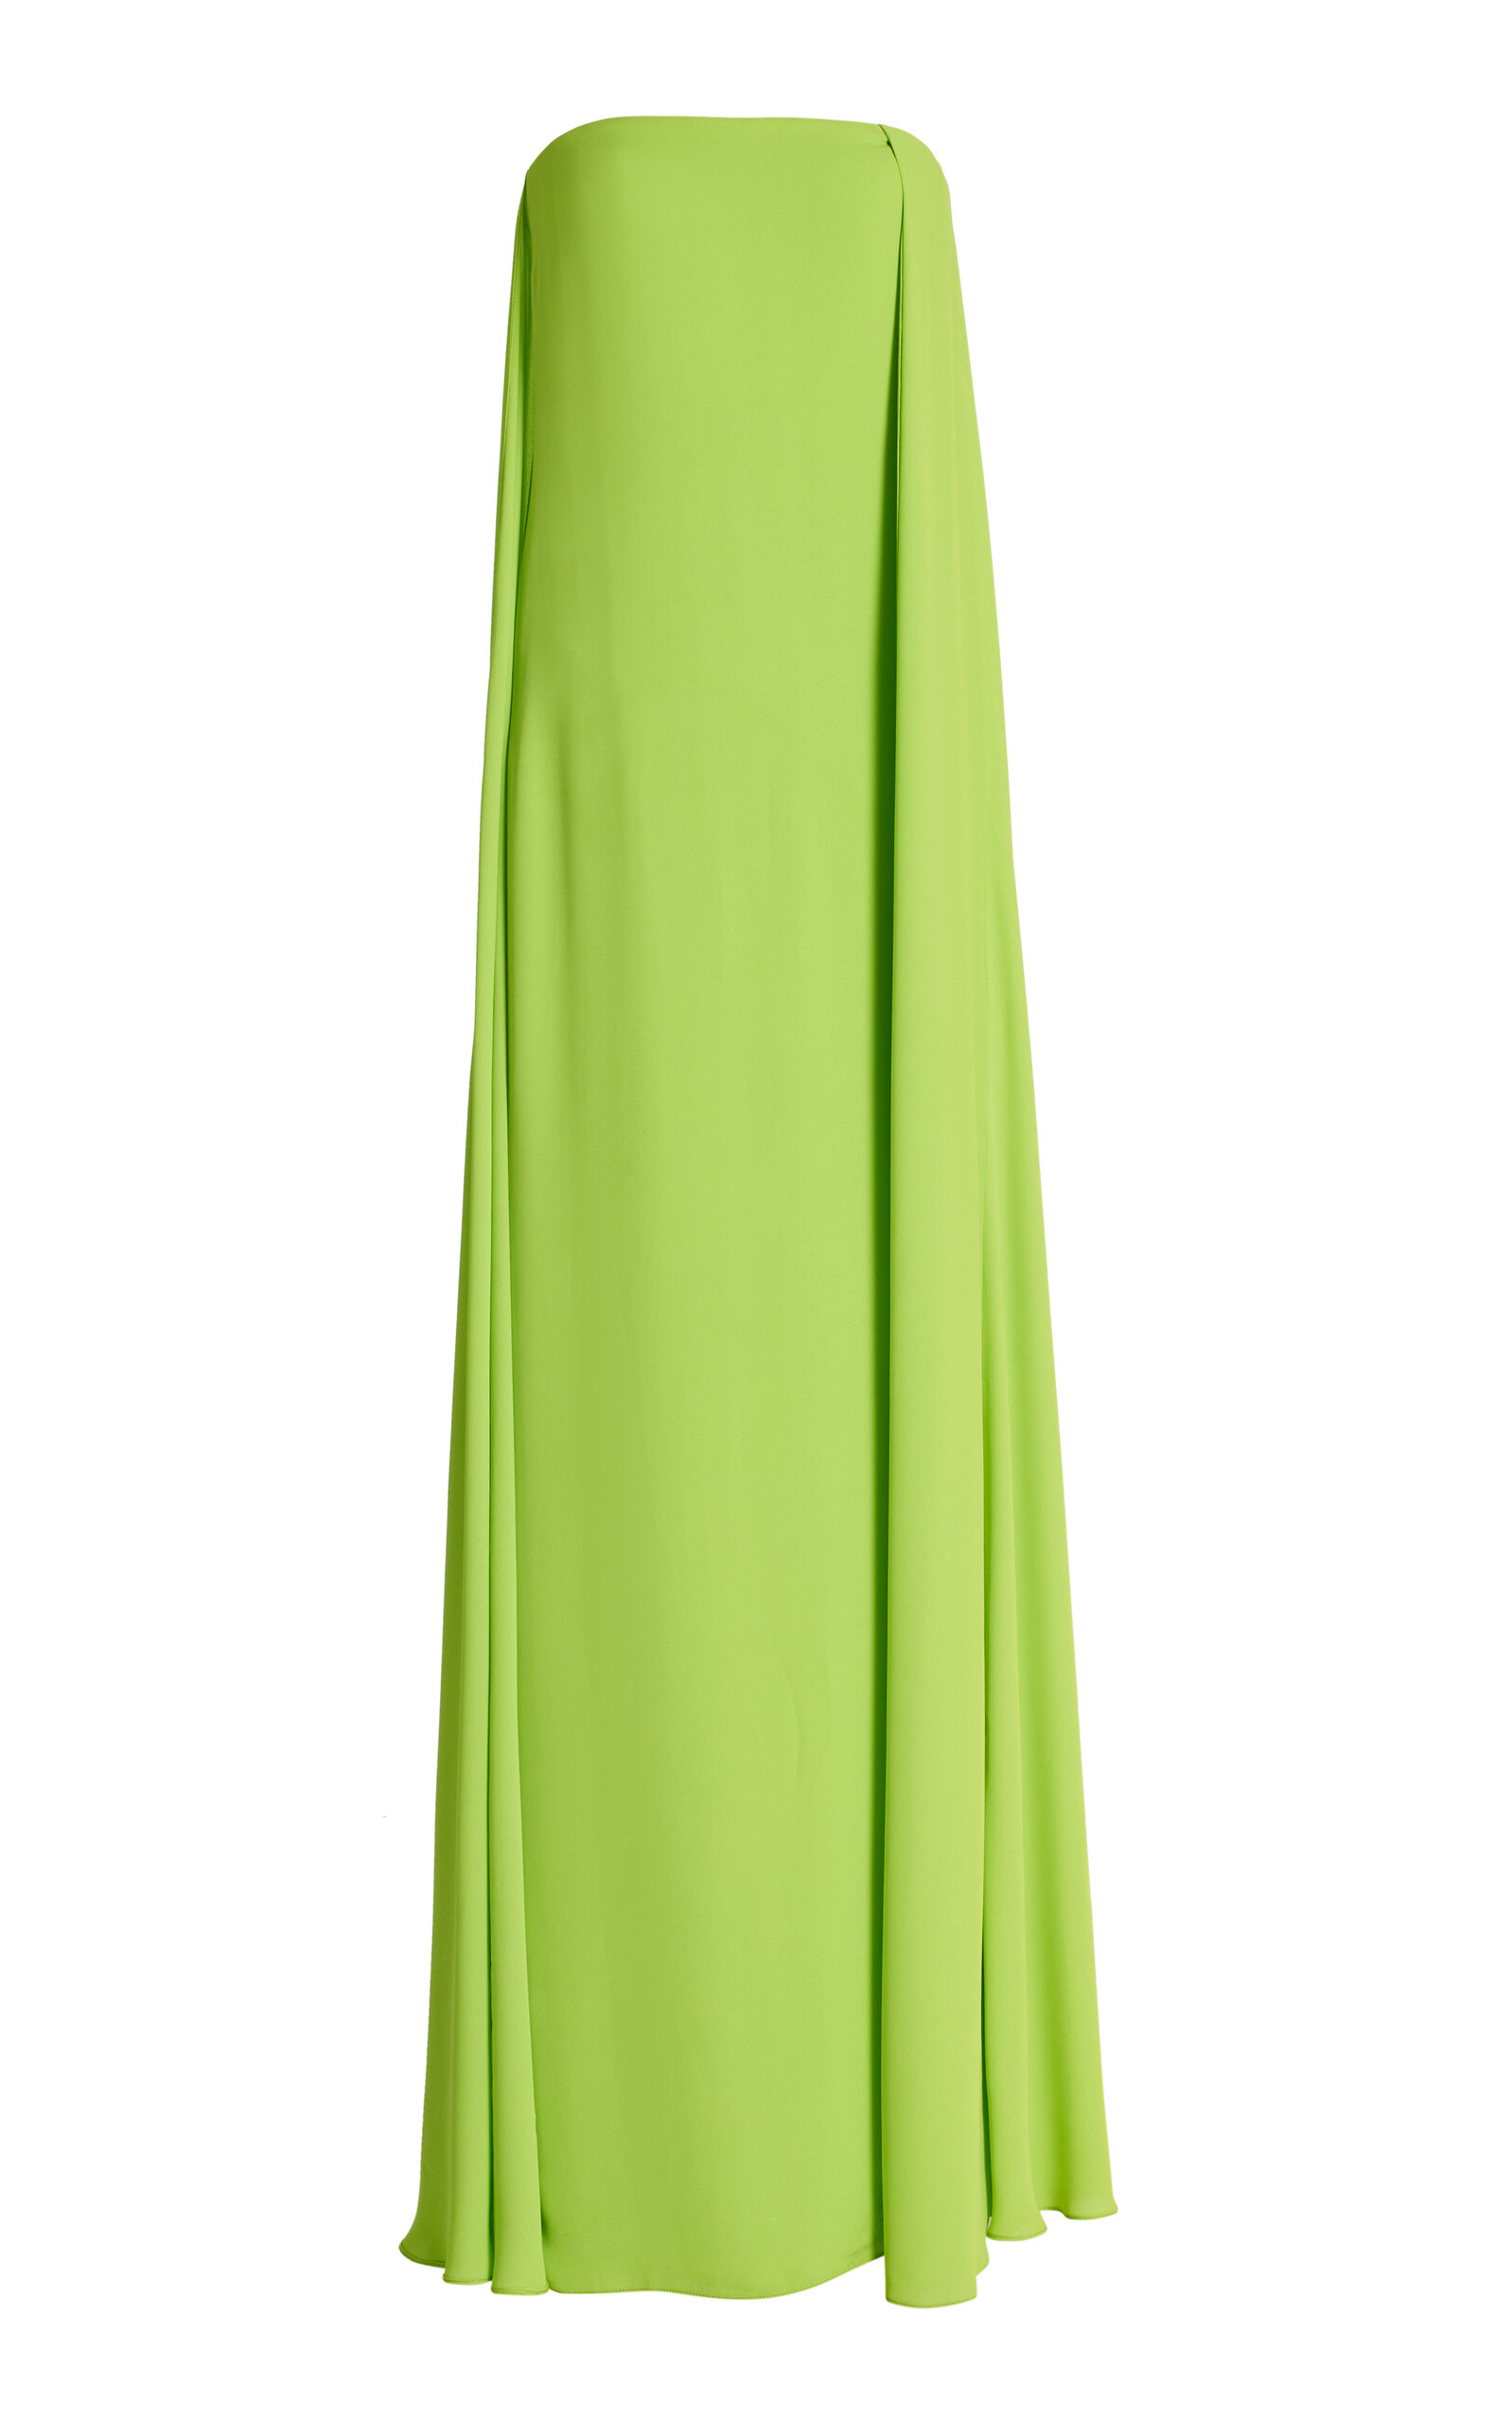 Carolina Herrera - Strapless Maxi Dress - Lime Green - US 2 - Moda Operandi